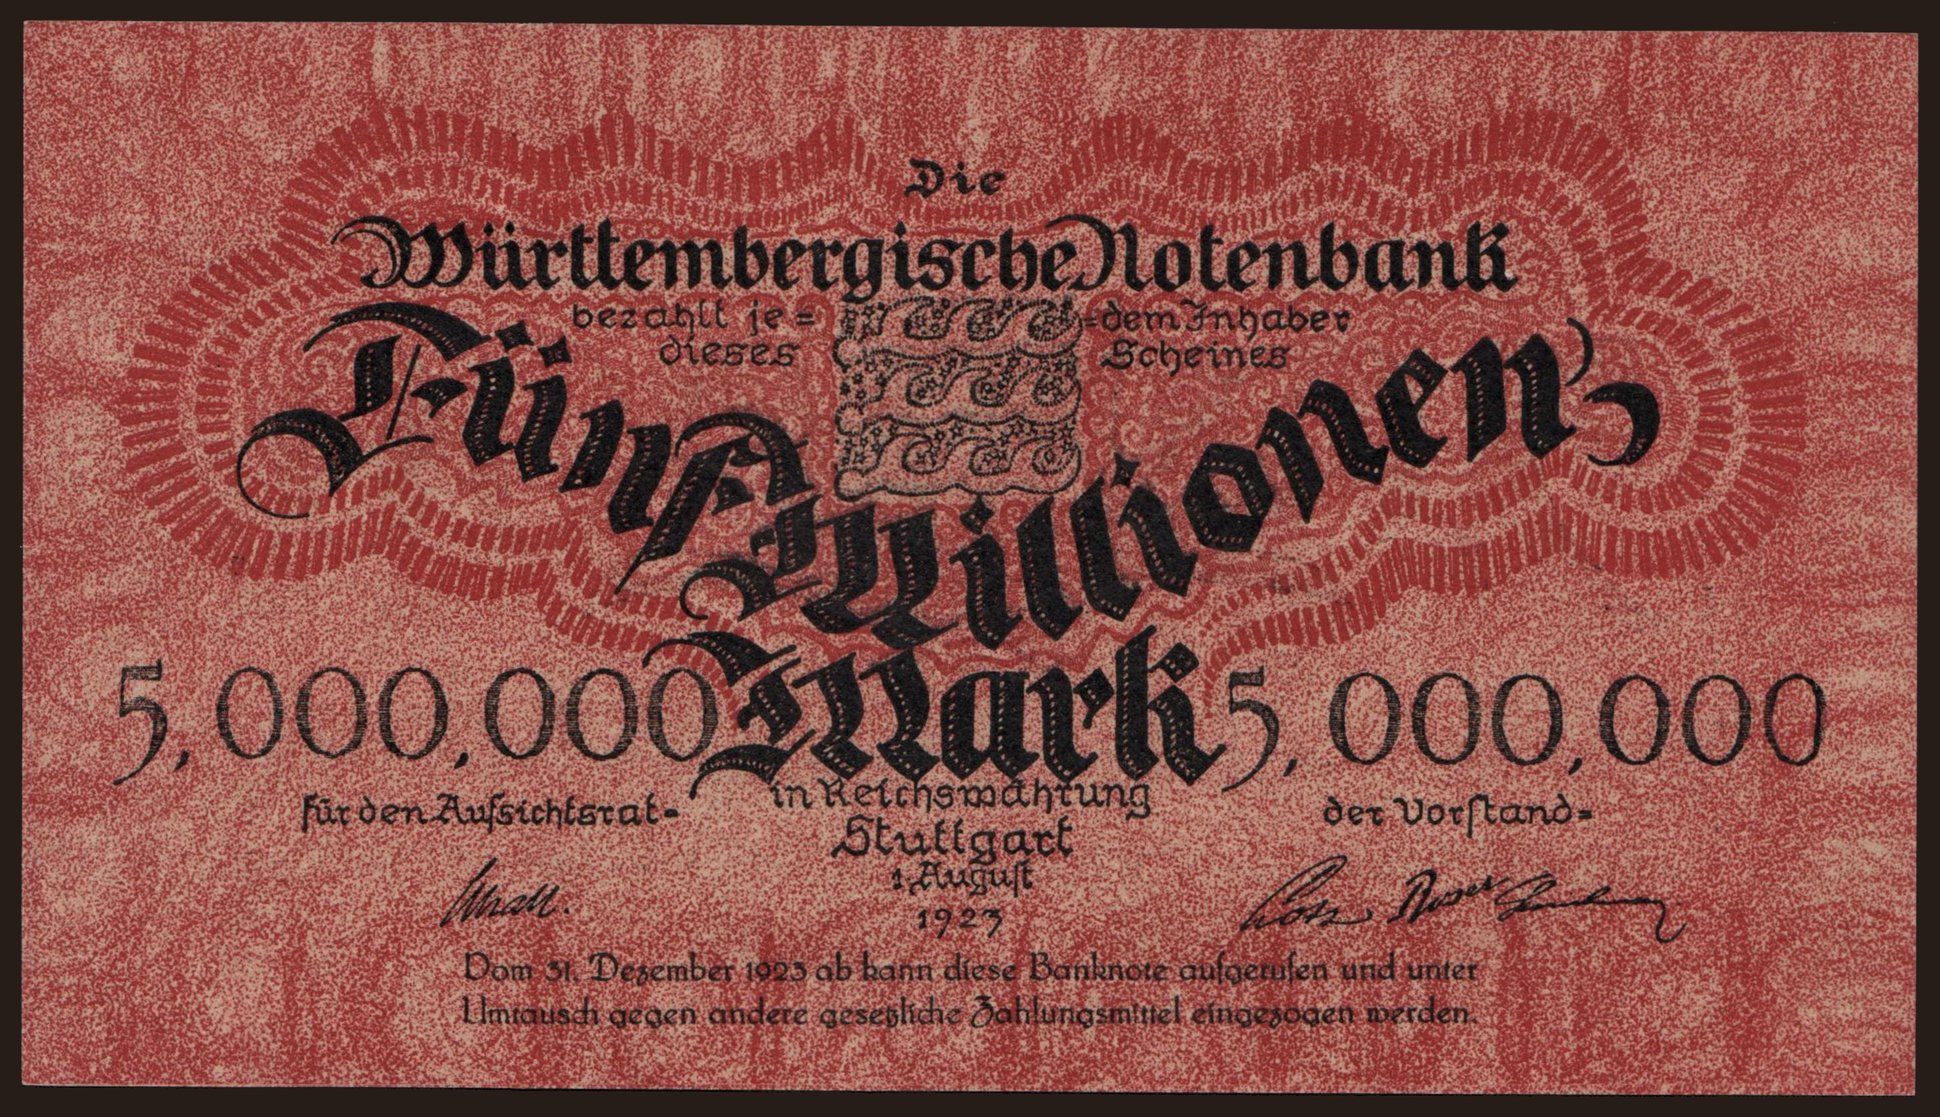 Württembergische Notenbank, 5.000.000 Mark, 1923